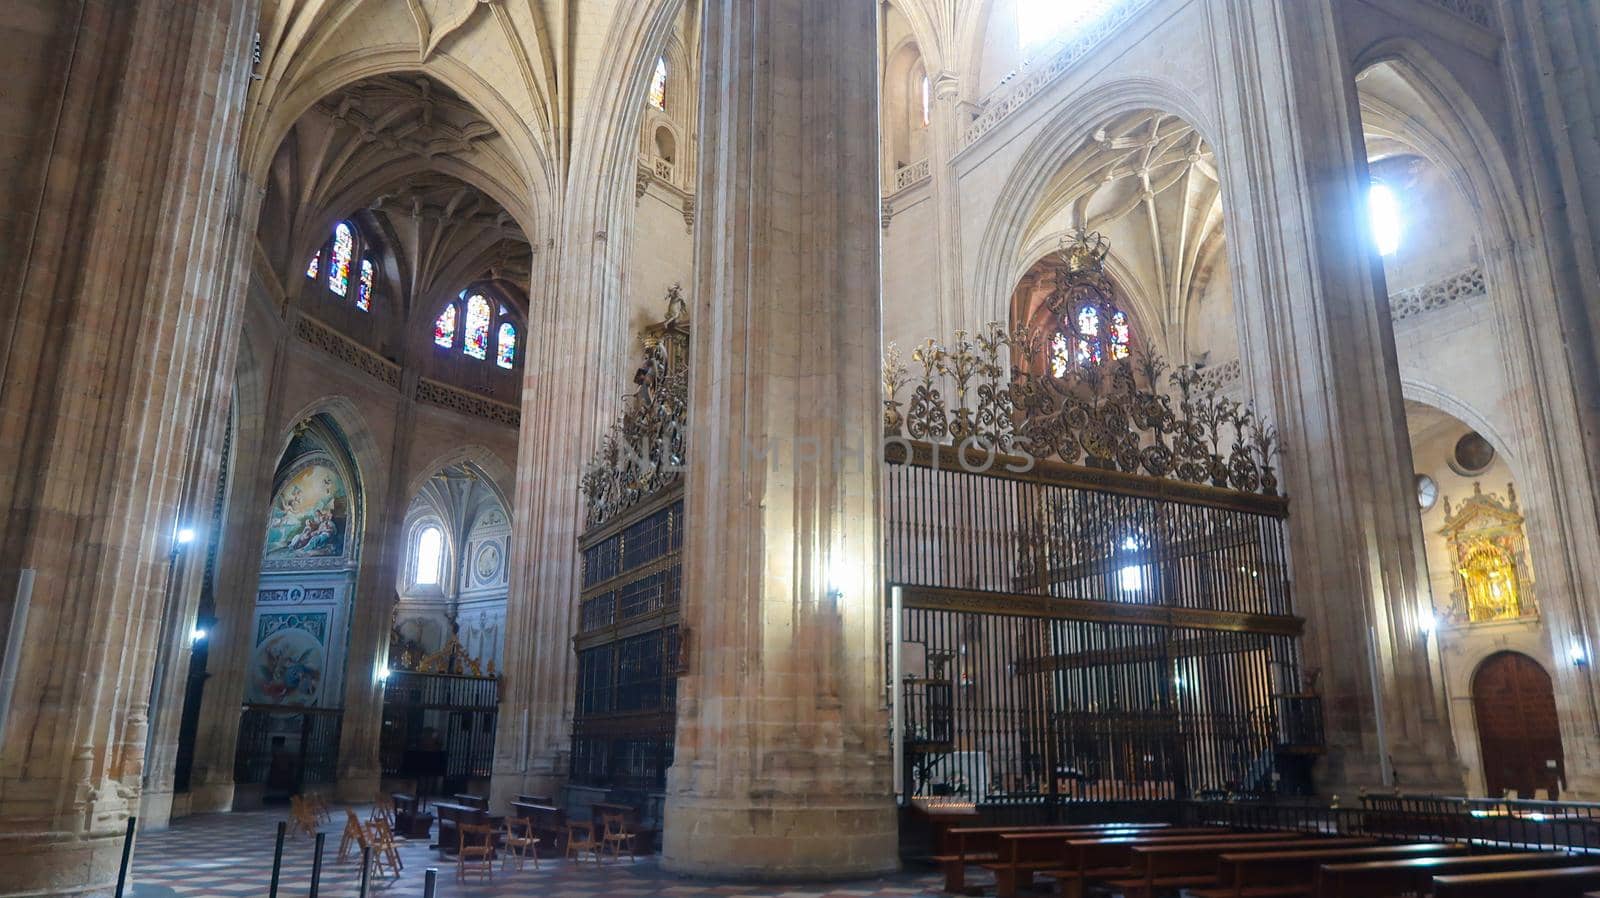 Segovia, Spain - 22 - September - 2020: Beautiful interior view of Segovia Cathedral